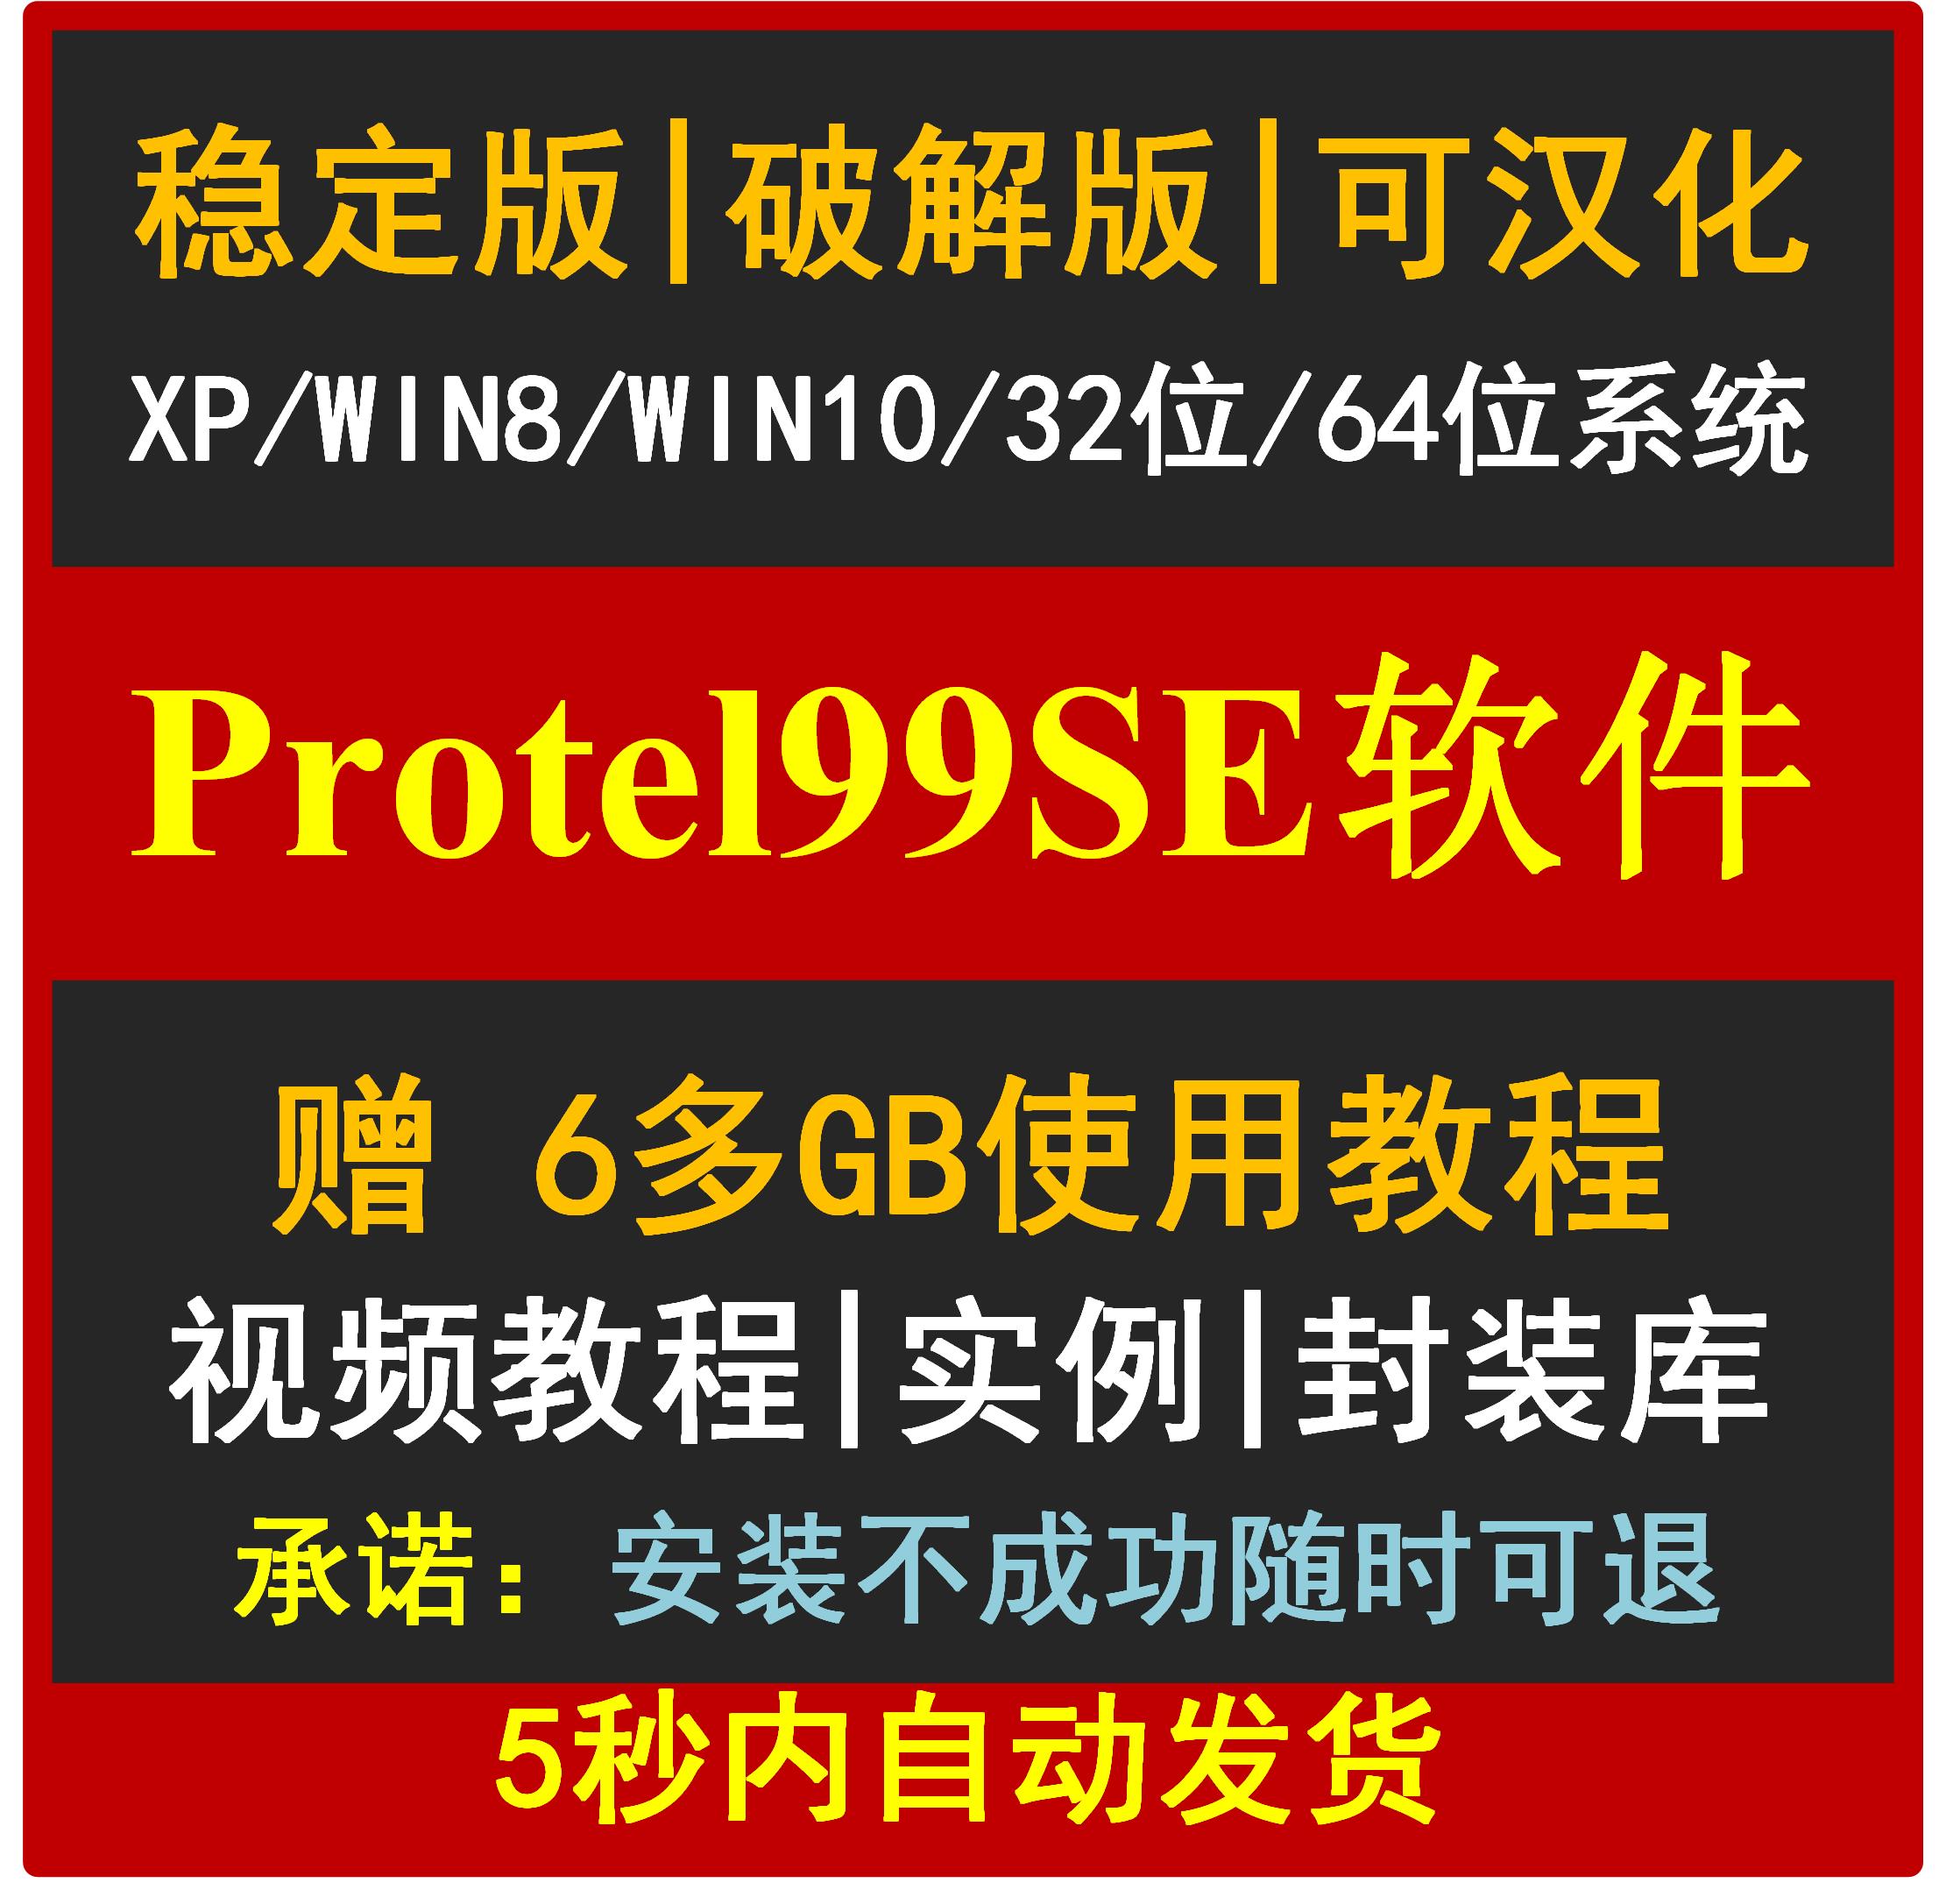 Protel99se中文软件 安装学习视频教程元件库 PCB实战入门到精通